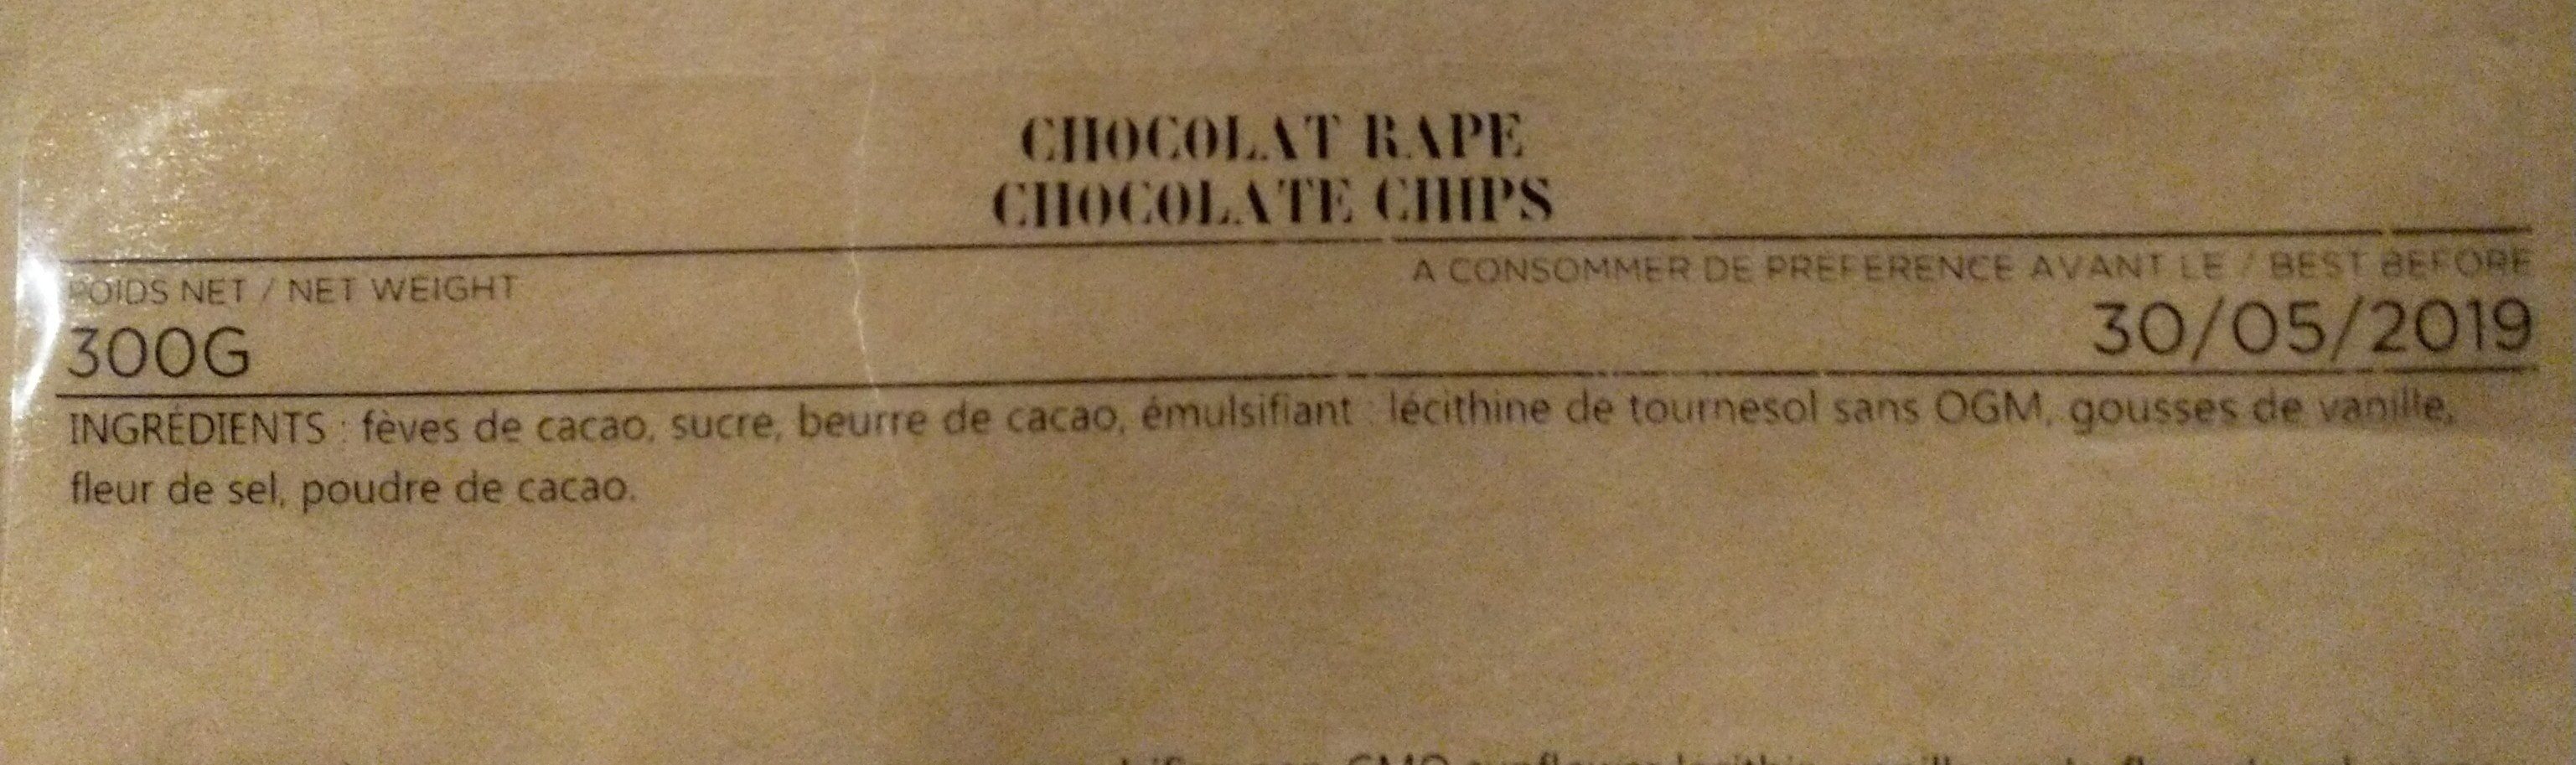 Chocolat râpé - Ingredients - fr